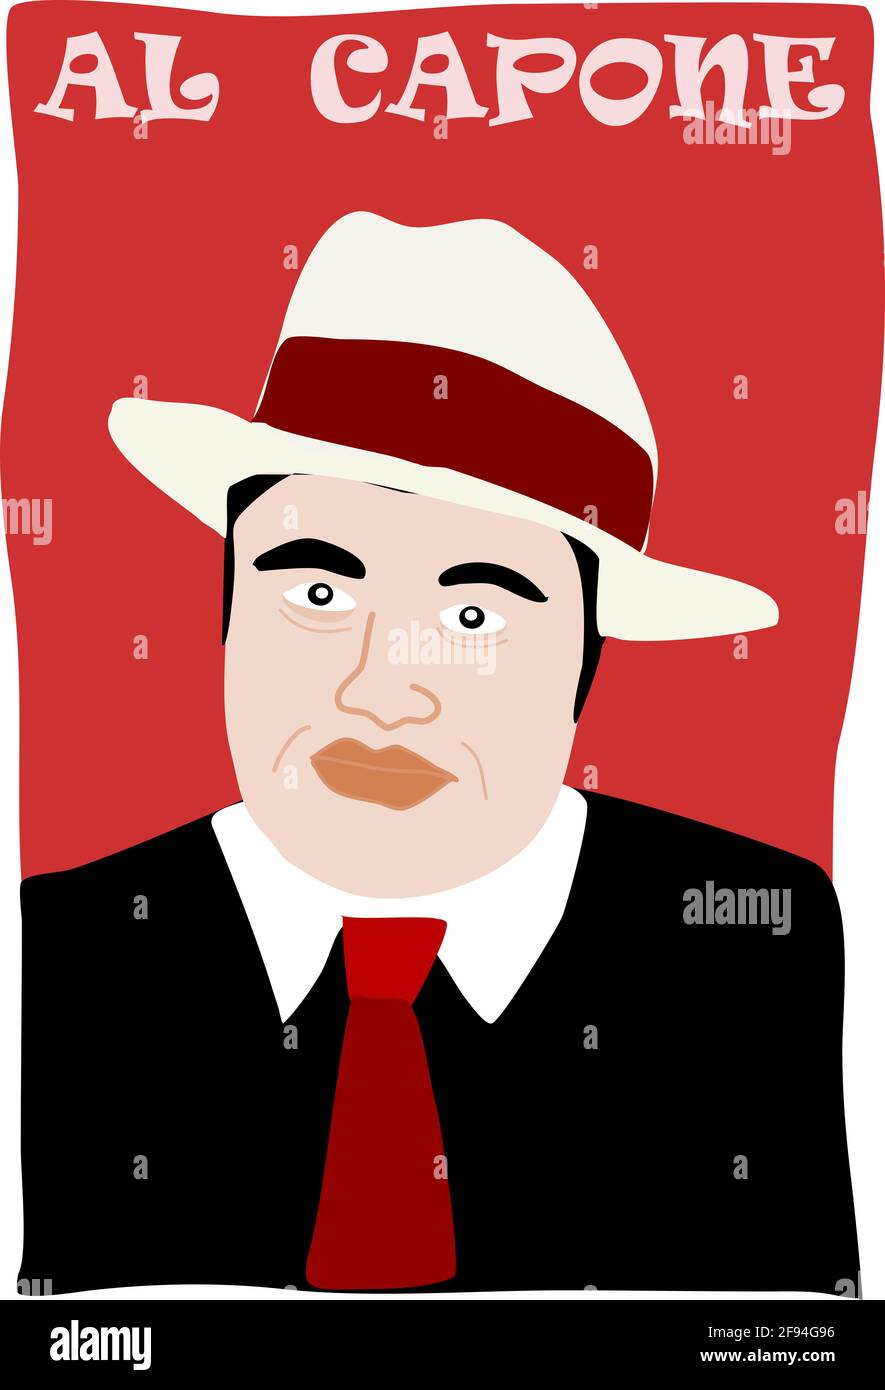 Al Capone portrait image with hat Stock Photo